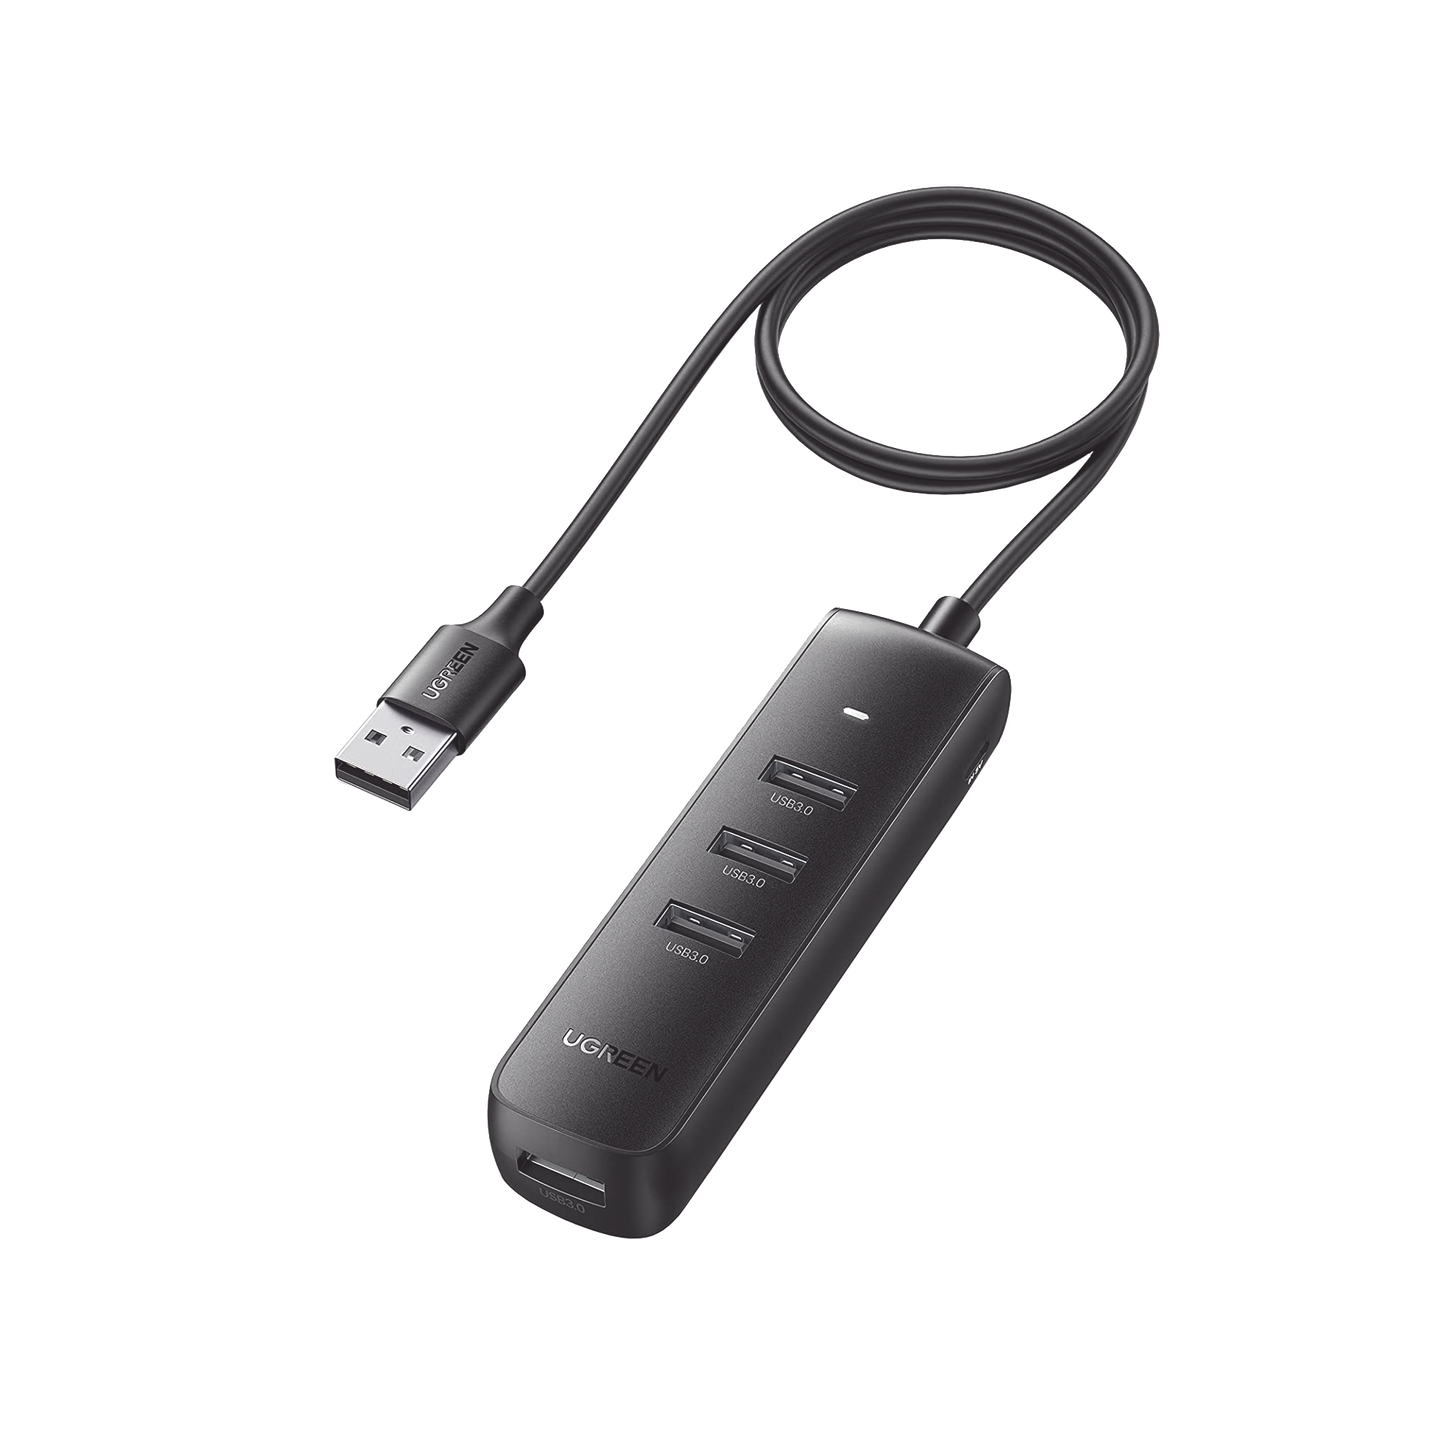 HUB USB-A Multipuertos / 4 Puertos USB 3.0 (5Gbps) / Cable de 1 Metro / Indicador Led / Ideal para Transferencia de Datos / Entrada Tipo C para alimentar equipos de mayor consumo como discos duros / Color Negro / 4 en 1.